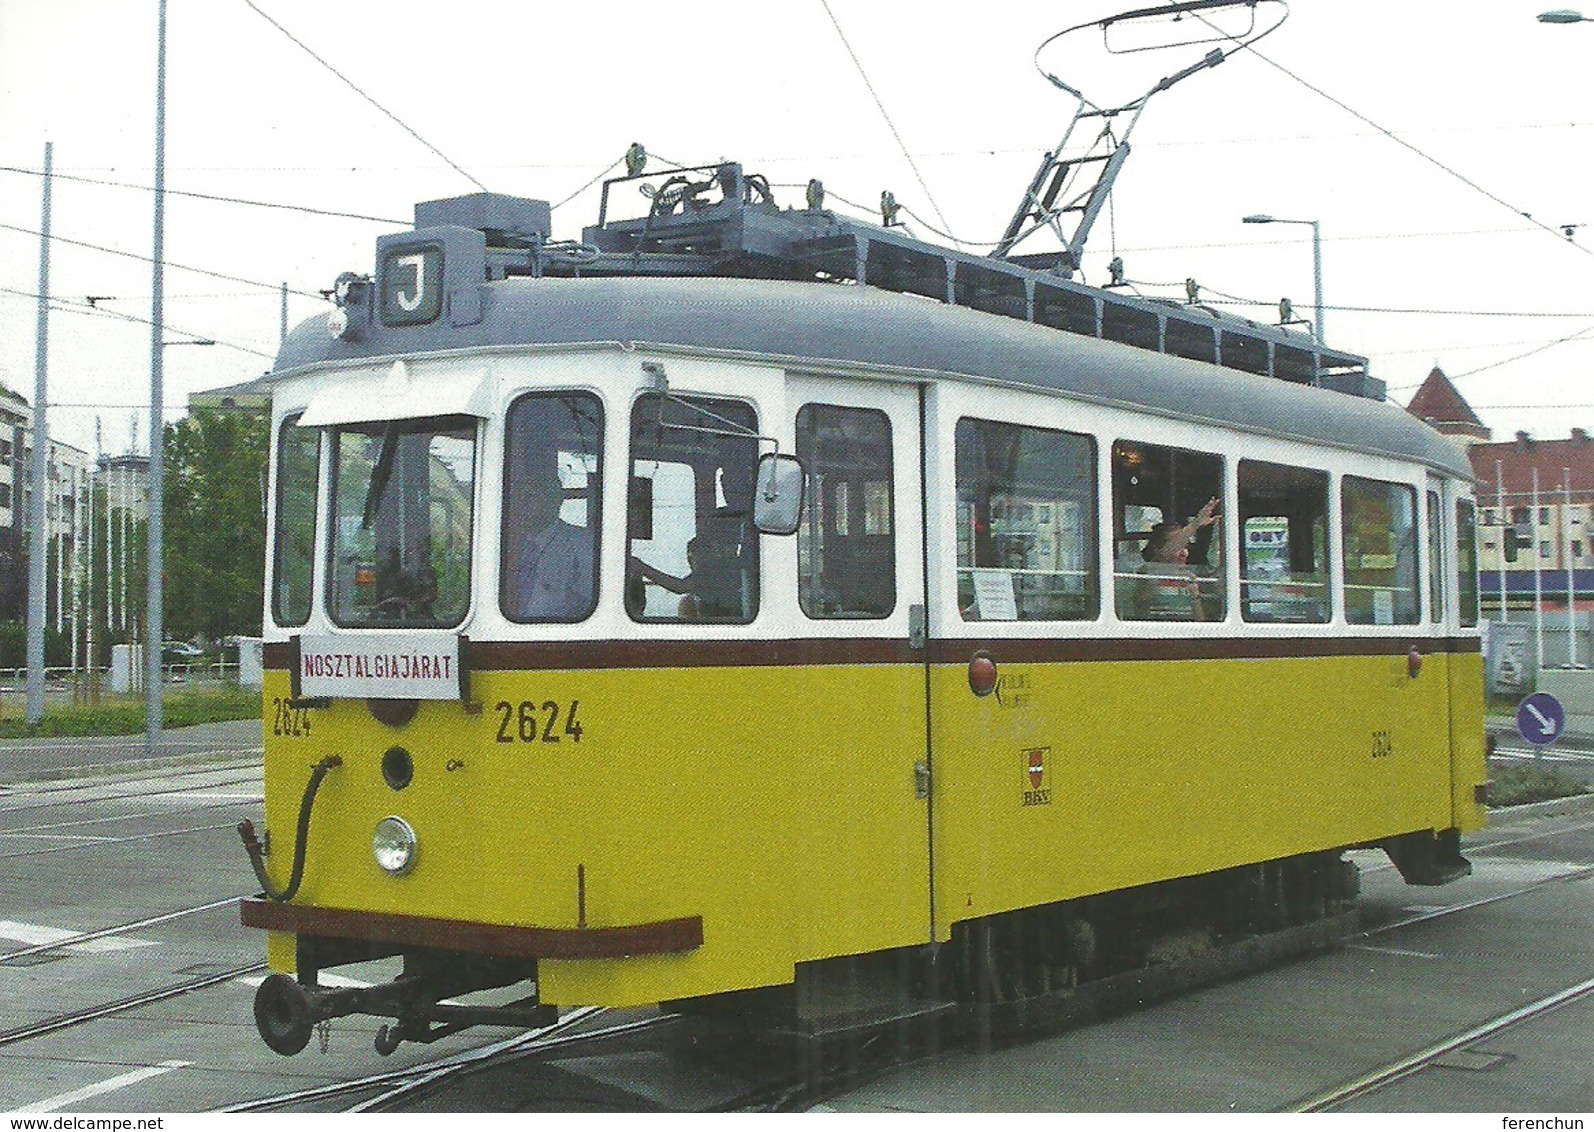 TRAM * NOSTALGIA TRAMWAY * RAIL * RAILWAY * RAILROAD * BKV * KOBANYA * BUDAPEST * Top Card 0448 * Hungary - Tram